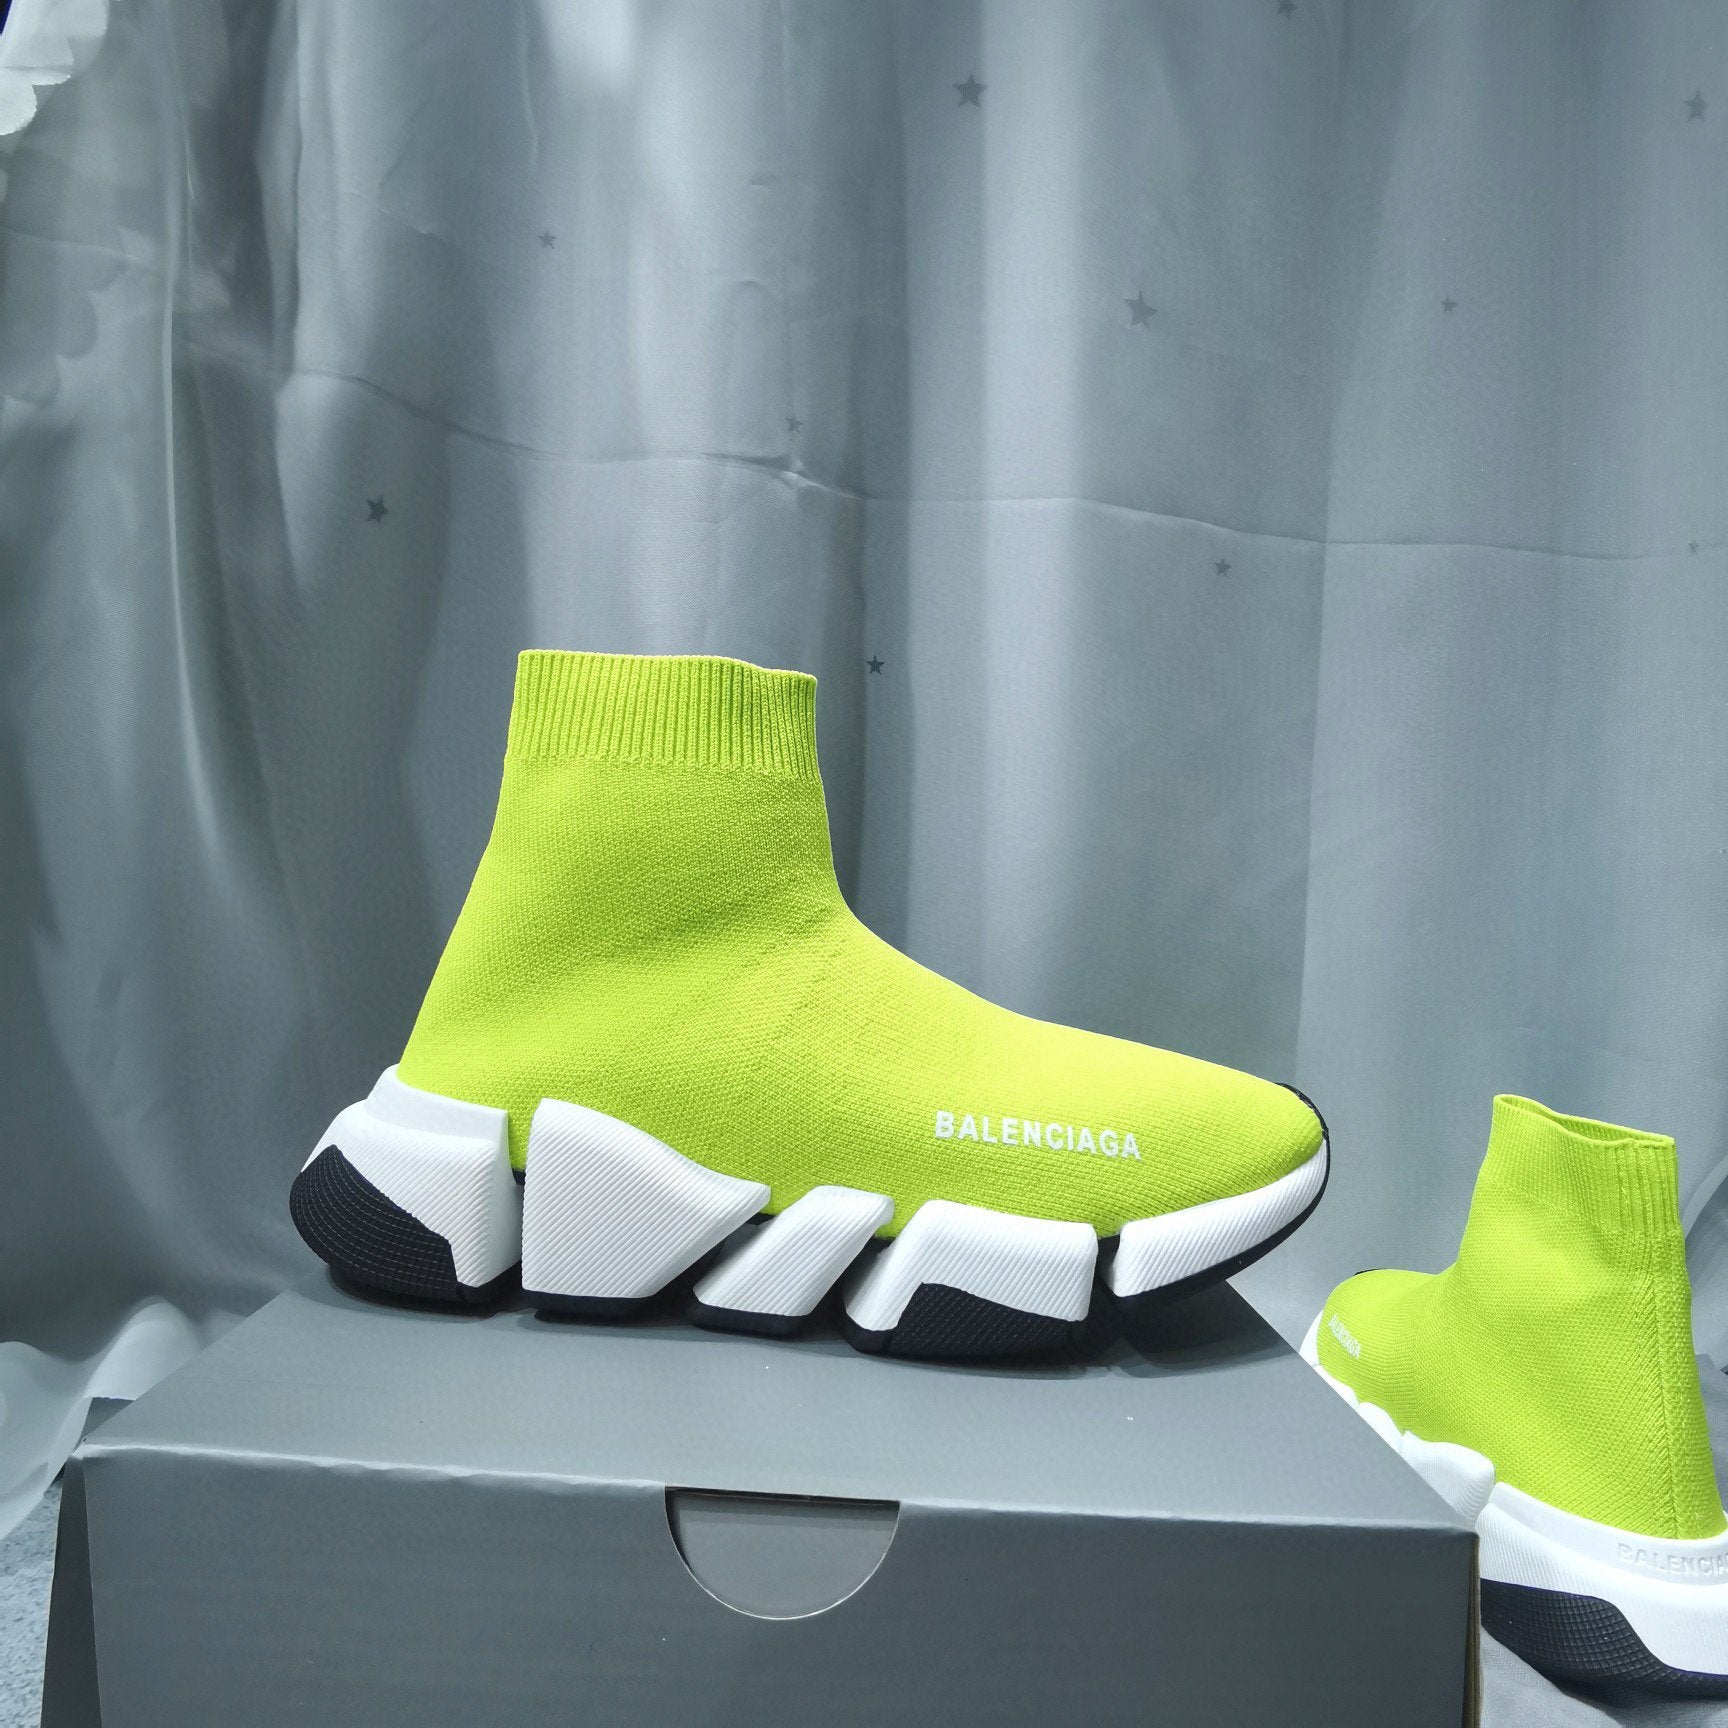 Balenciaga Men's And Women's Flyknit Speed Sneakers Shoe